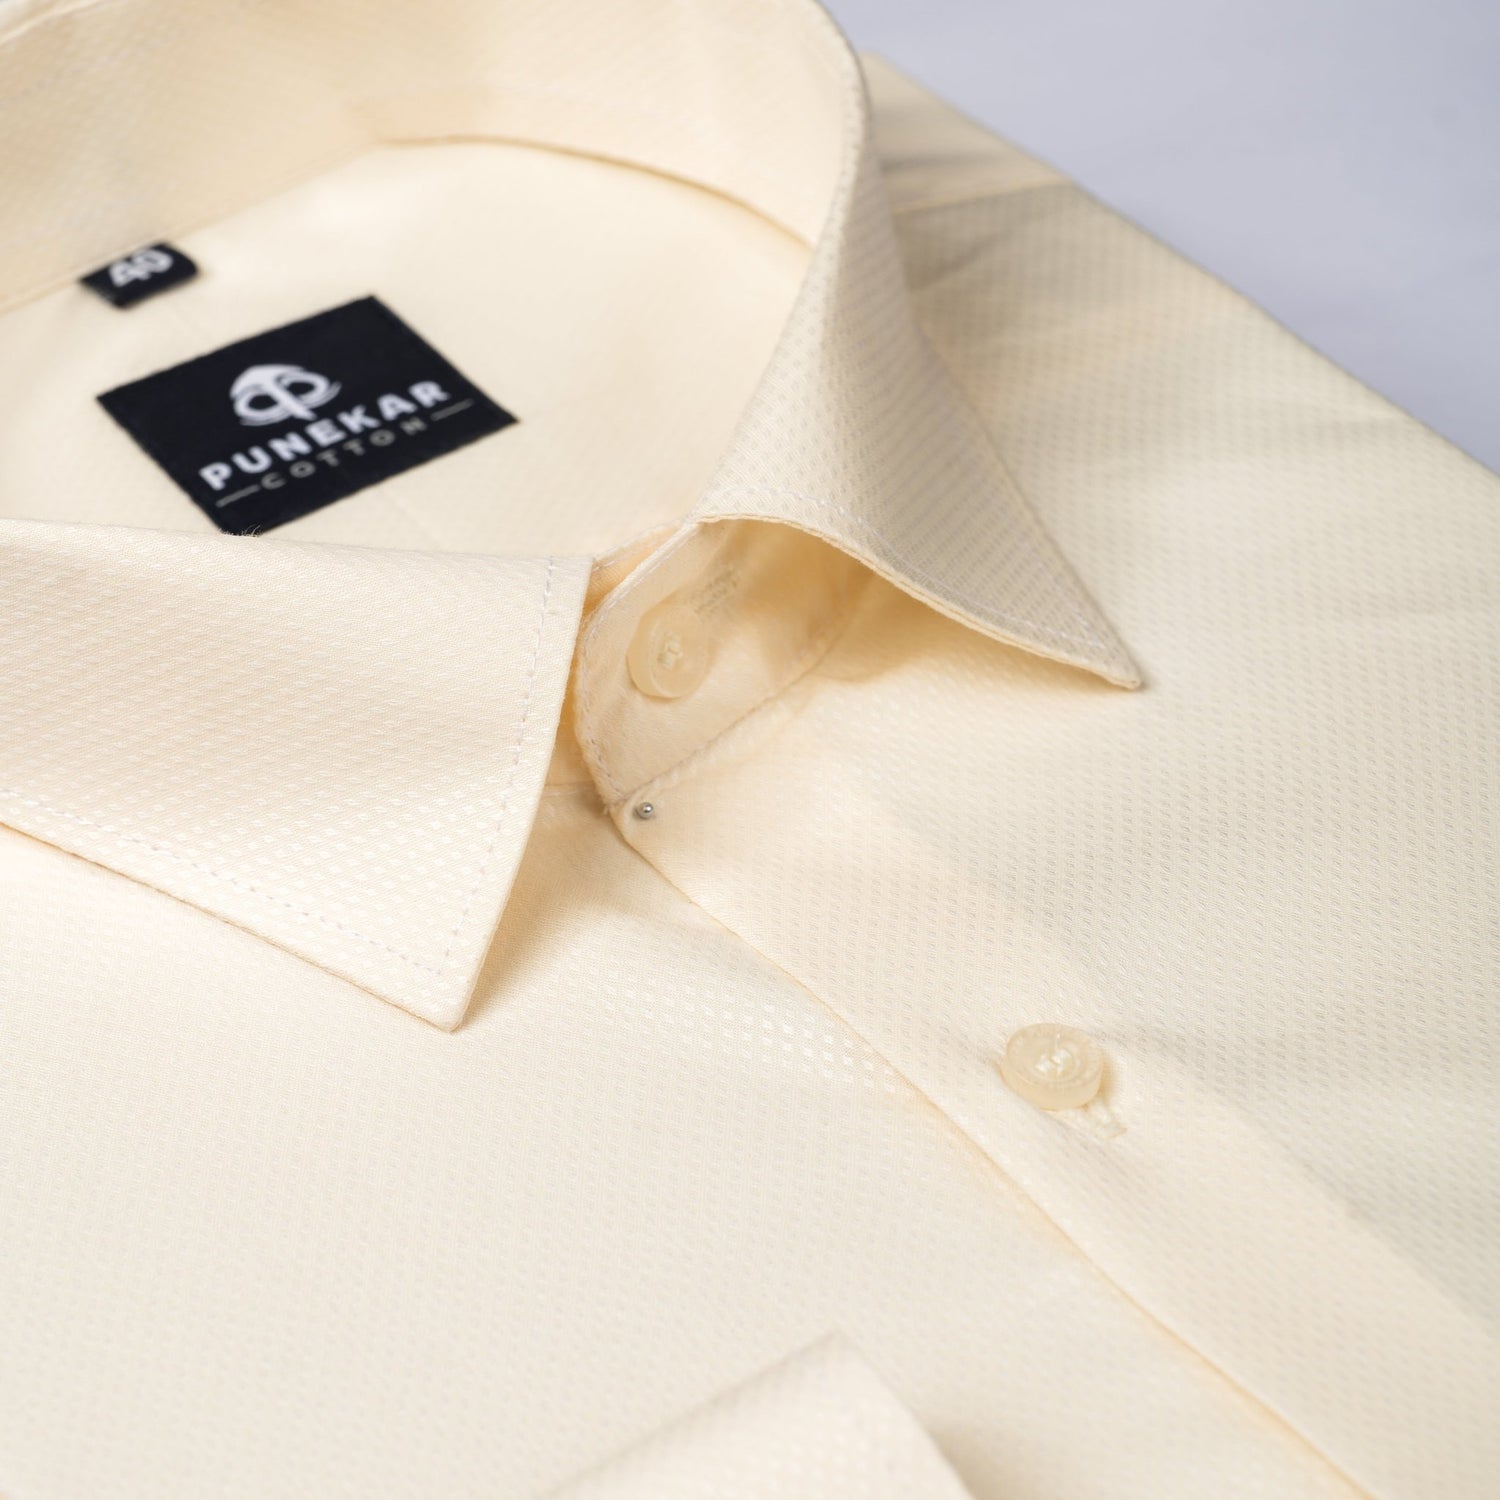 Cream Color Dotted Dobby Cotton Shirt For Men - Punekar Cotton